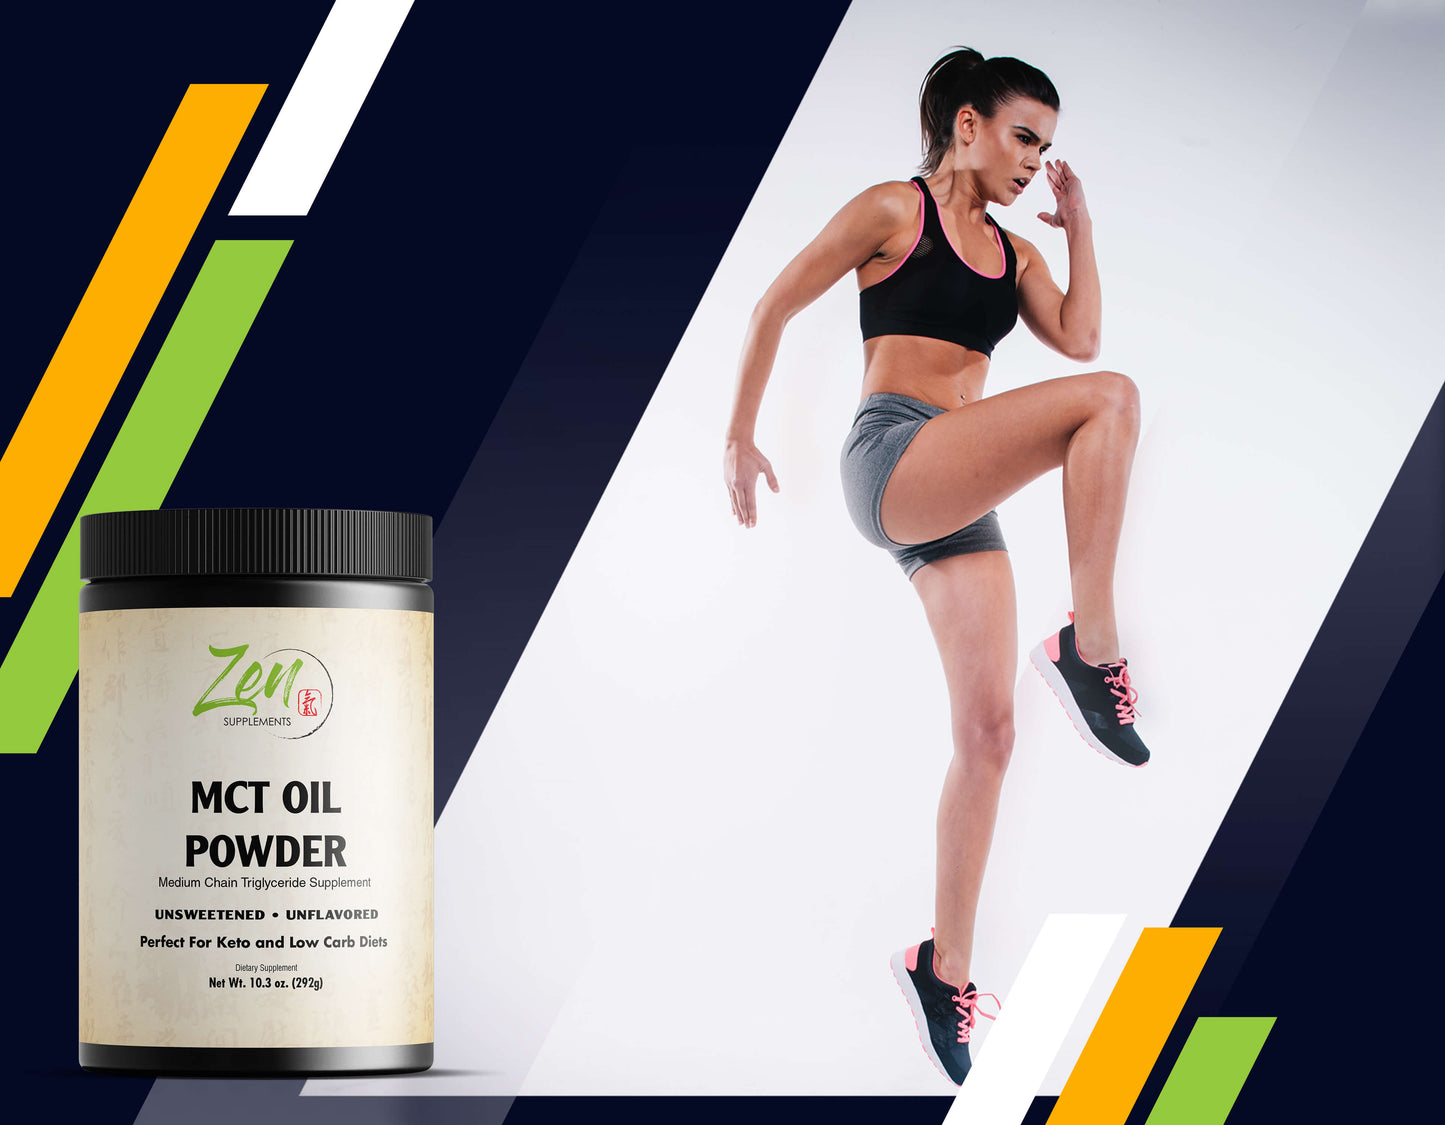 MCT Oil Powder - 100% Pure MCT's - 292g 10.3oz Powder